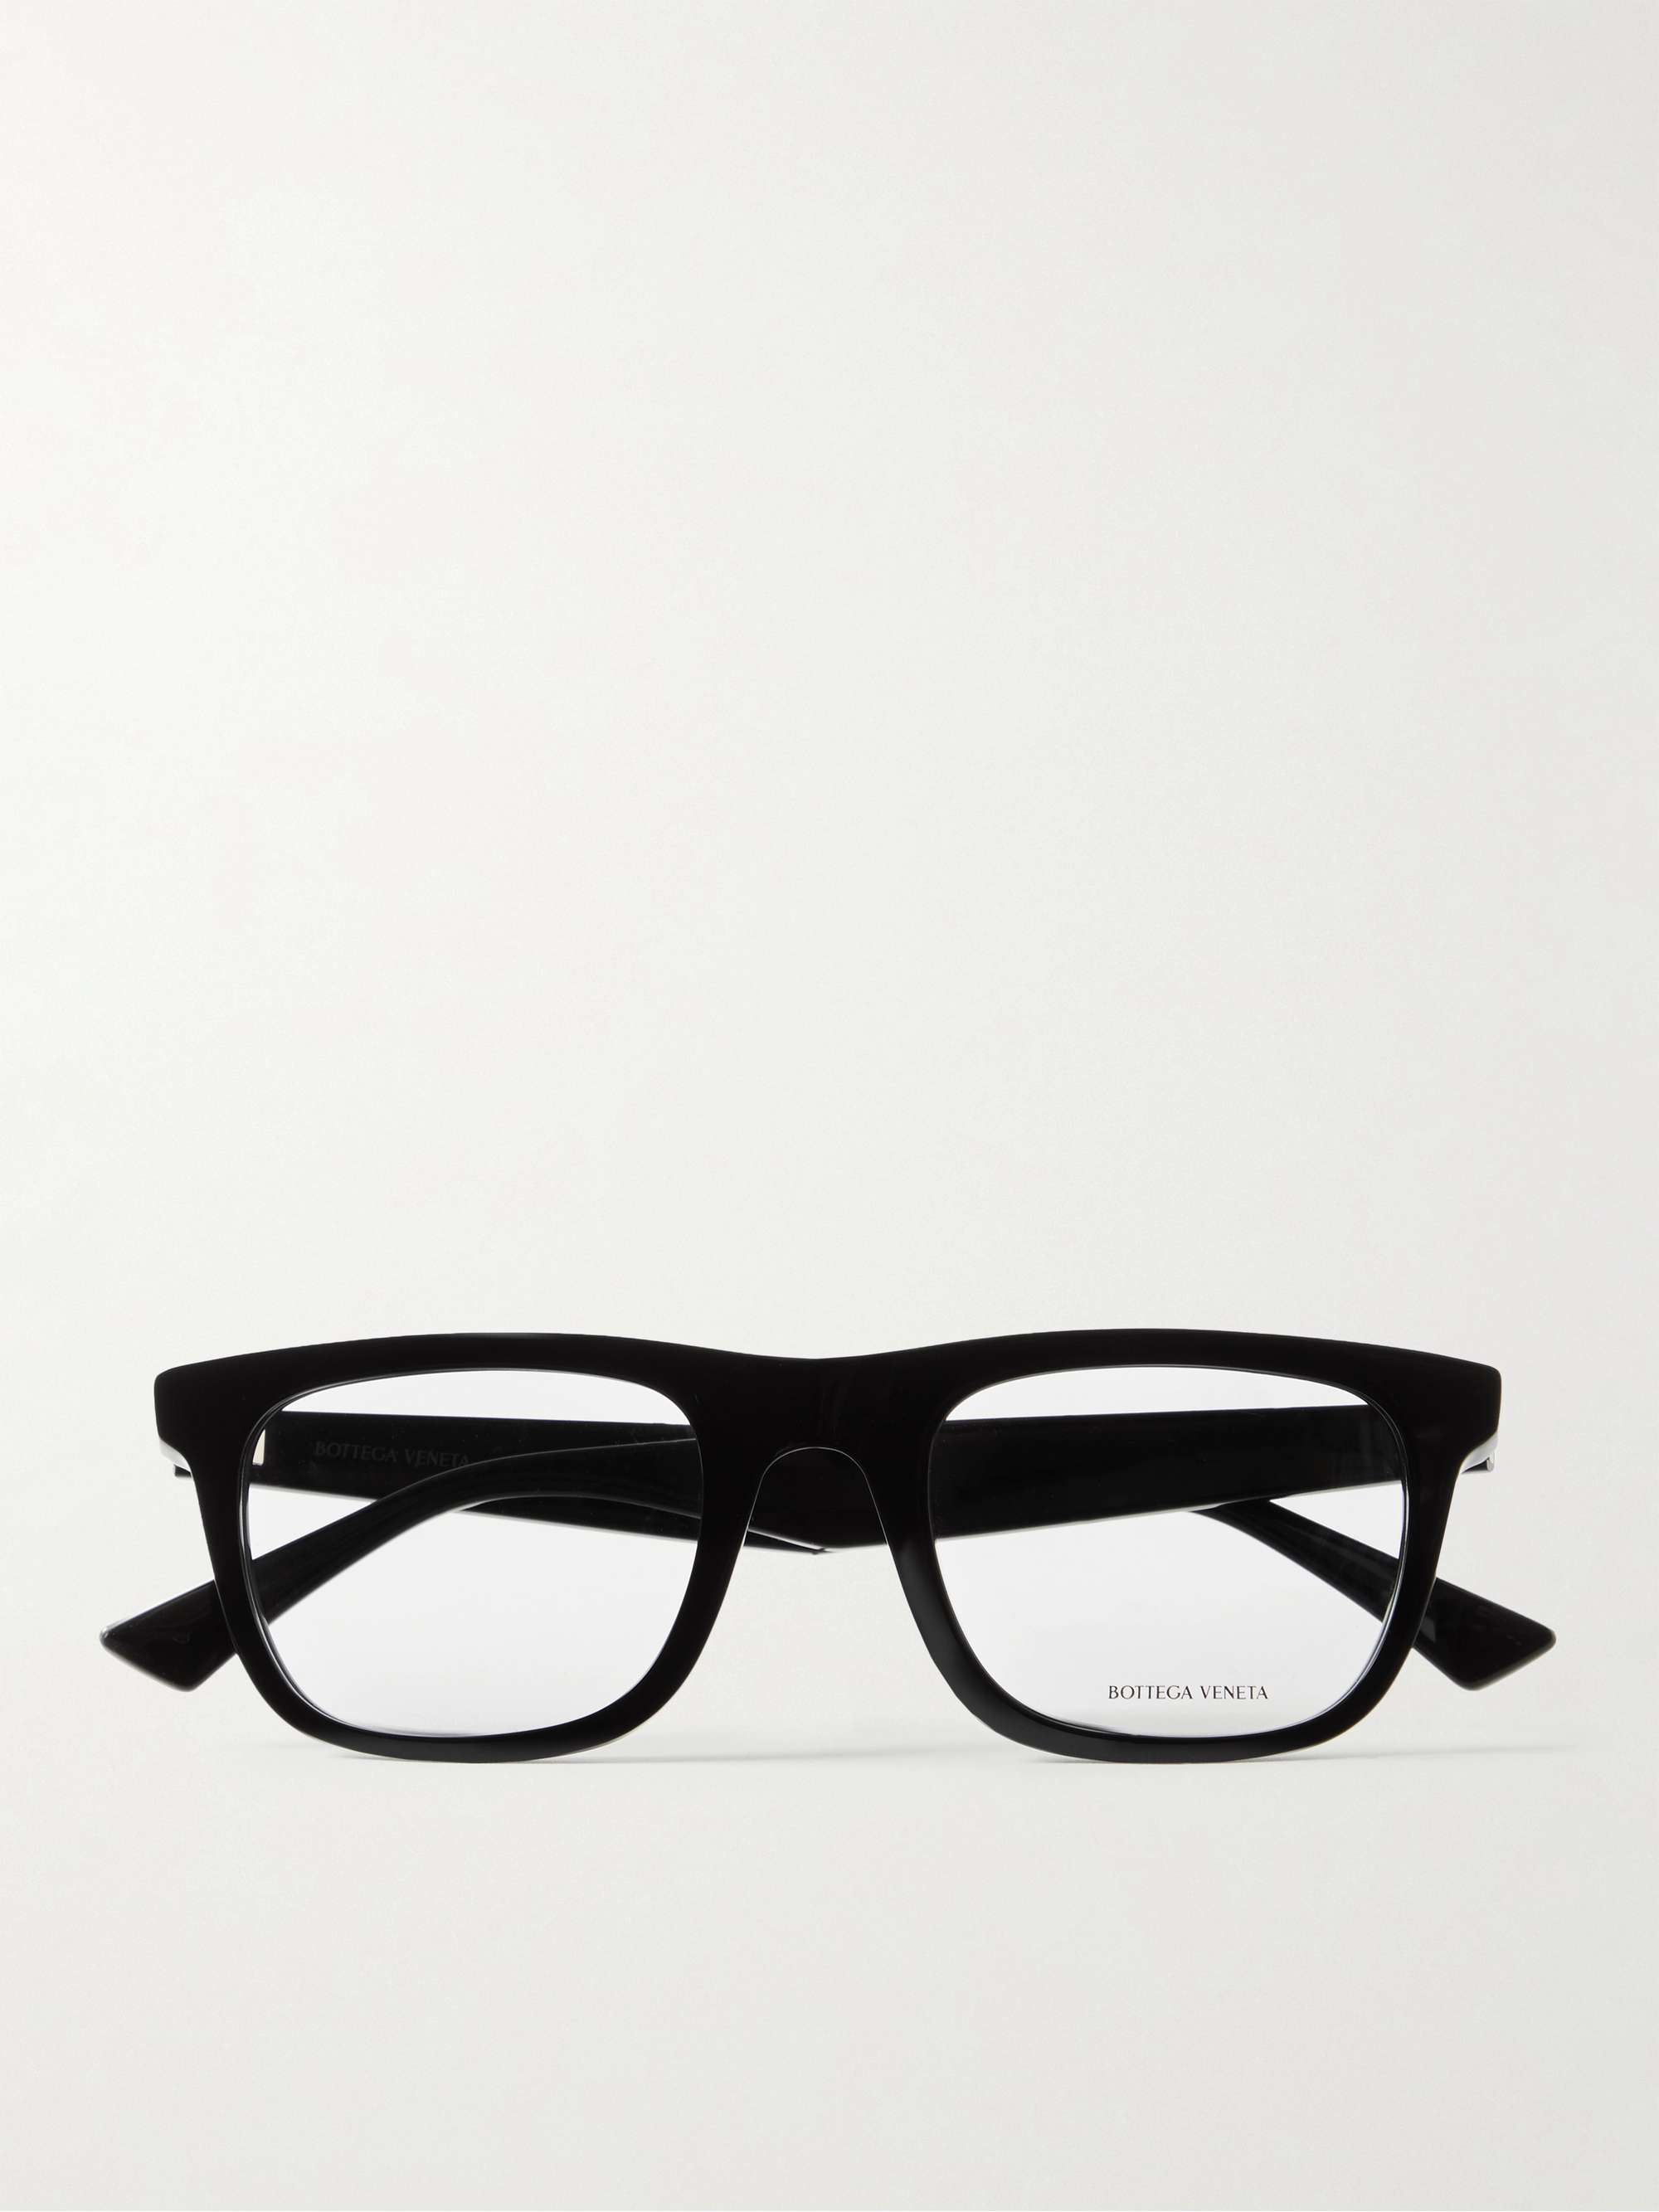 BOTTEGA VENETA EYEWEAR Square-Frame Acetate Optical Glasses